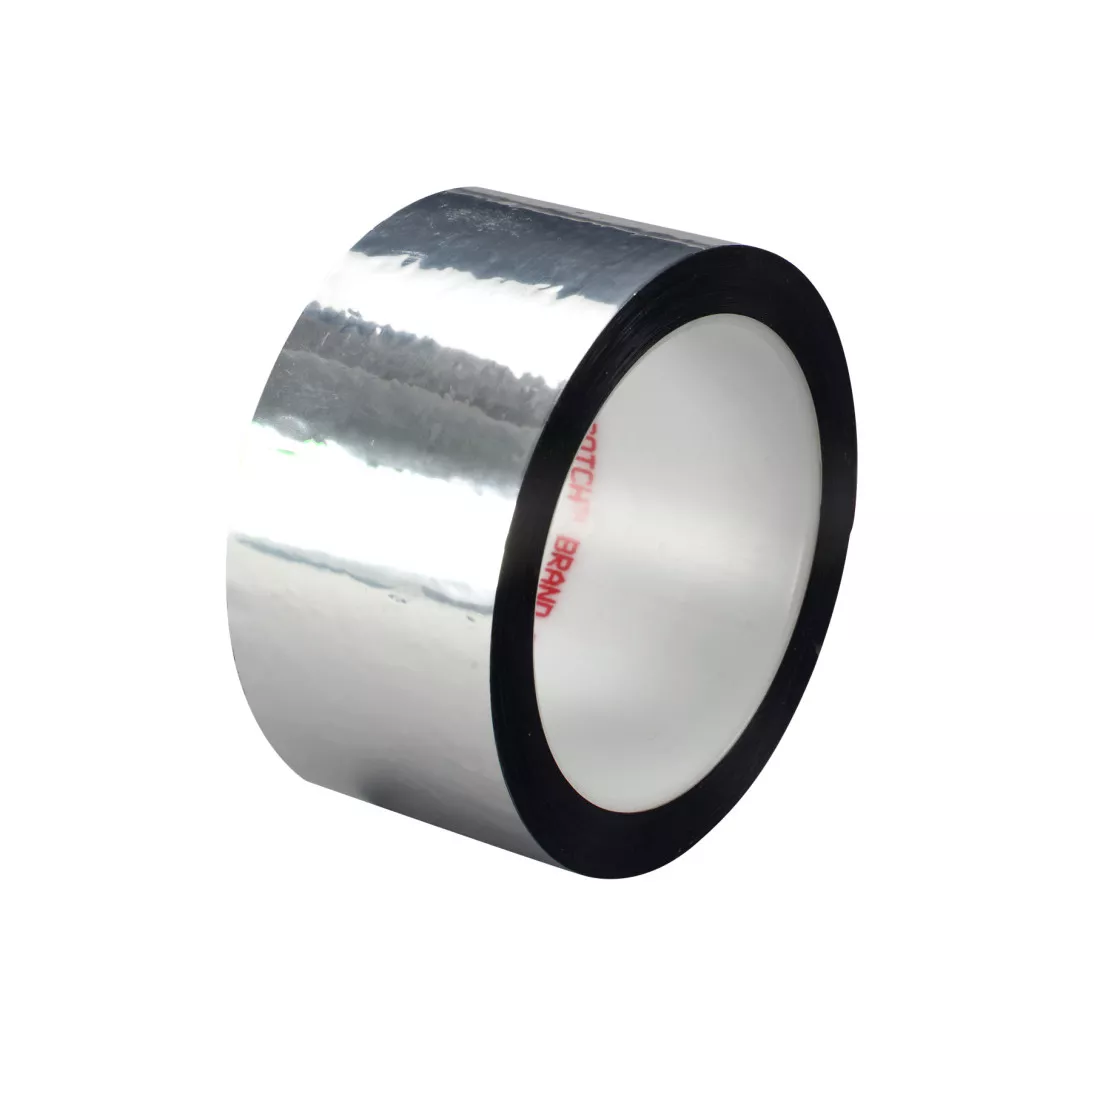 3M™ Polyester Film Tape 850, Silver, 1 1/2 in x 72 yd, 1.9 mil, 24 rolls
per case